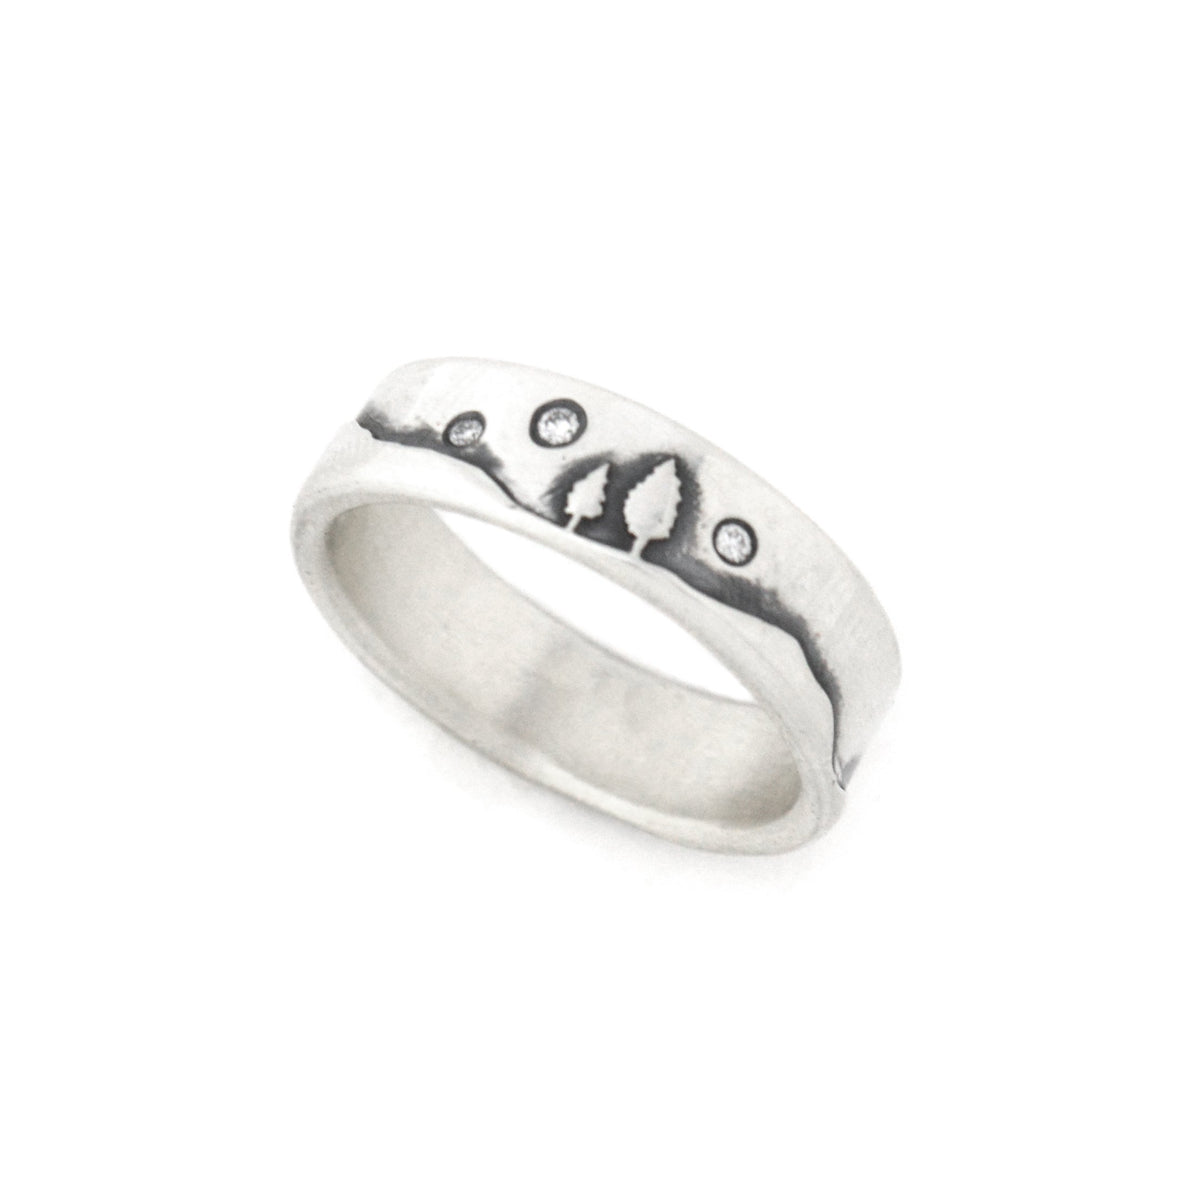 Silver Starry Diamond Sky Ring - Wedding Ring 8mm / 4 8mm / 4.25 2455 - handmade by Beth Millner Jewelry